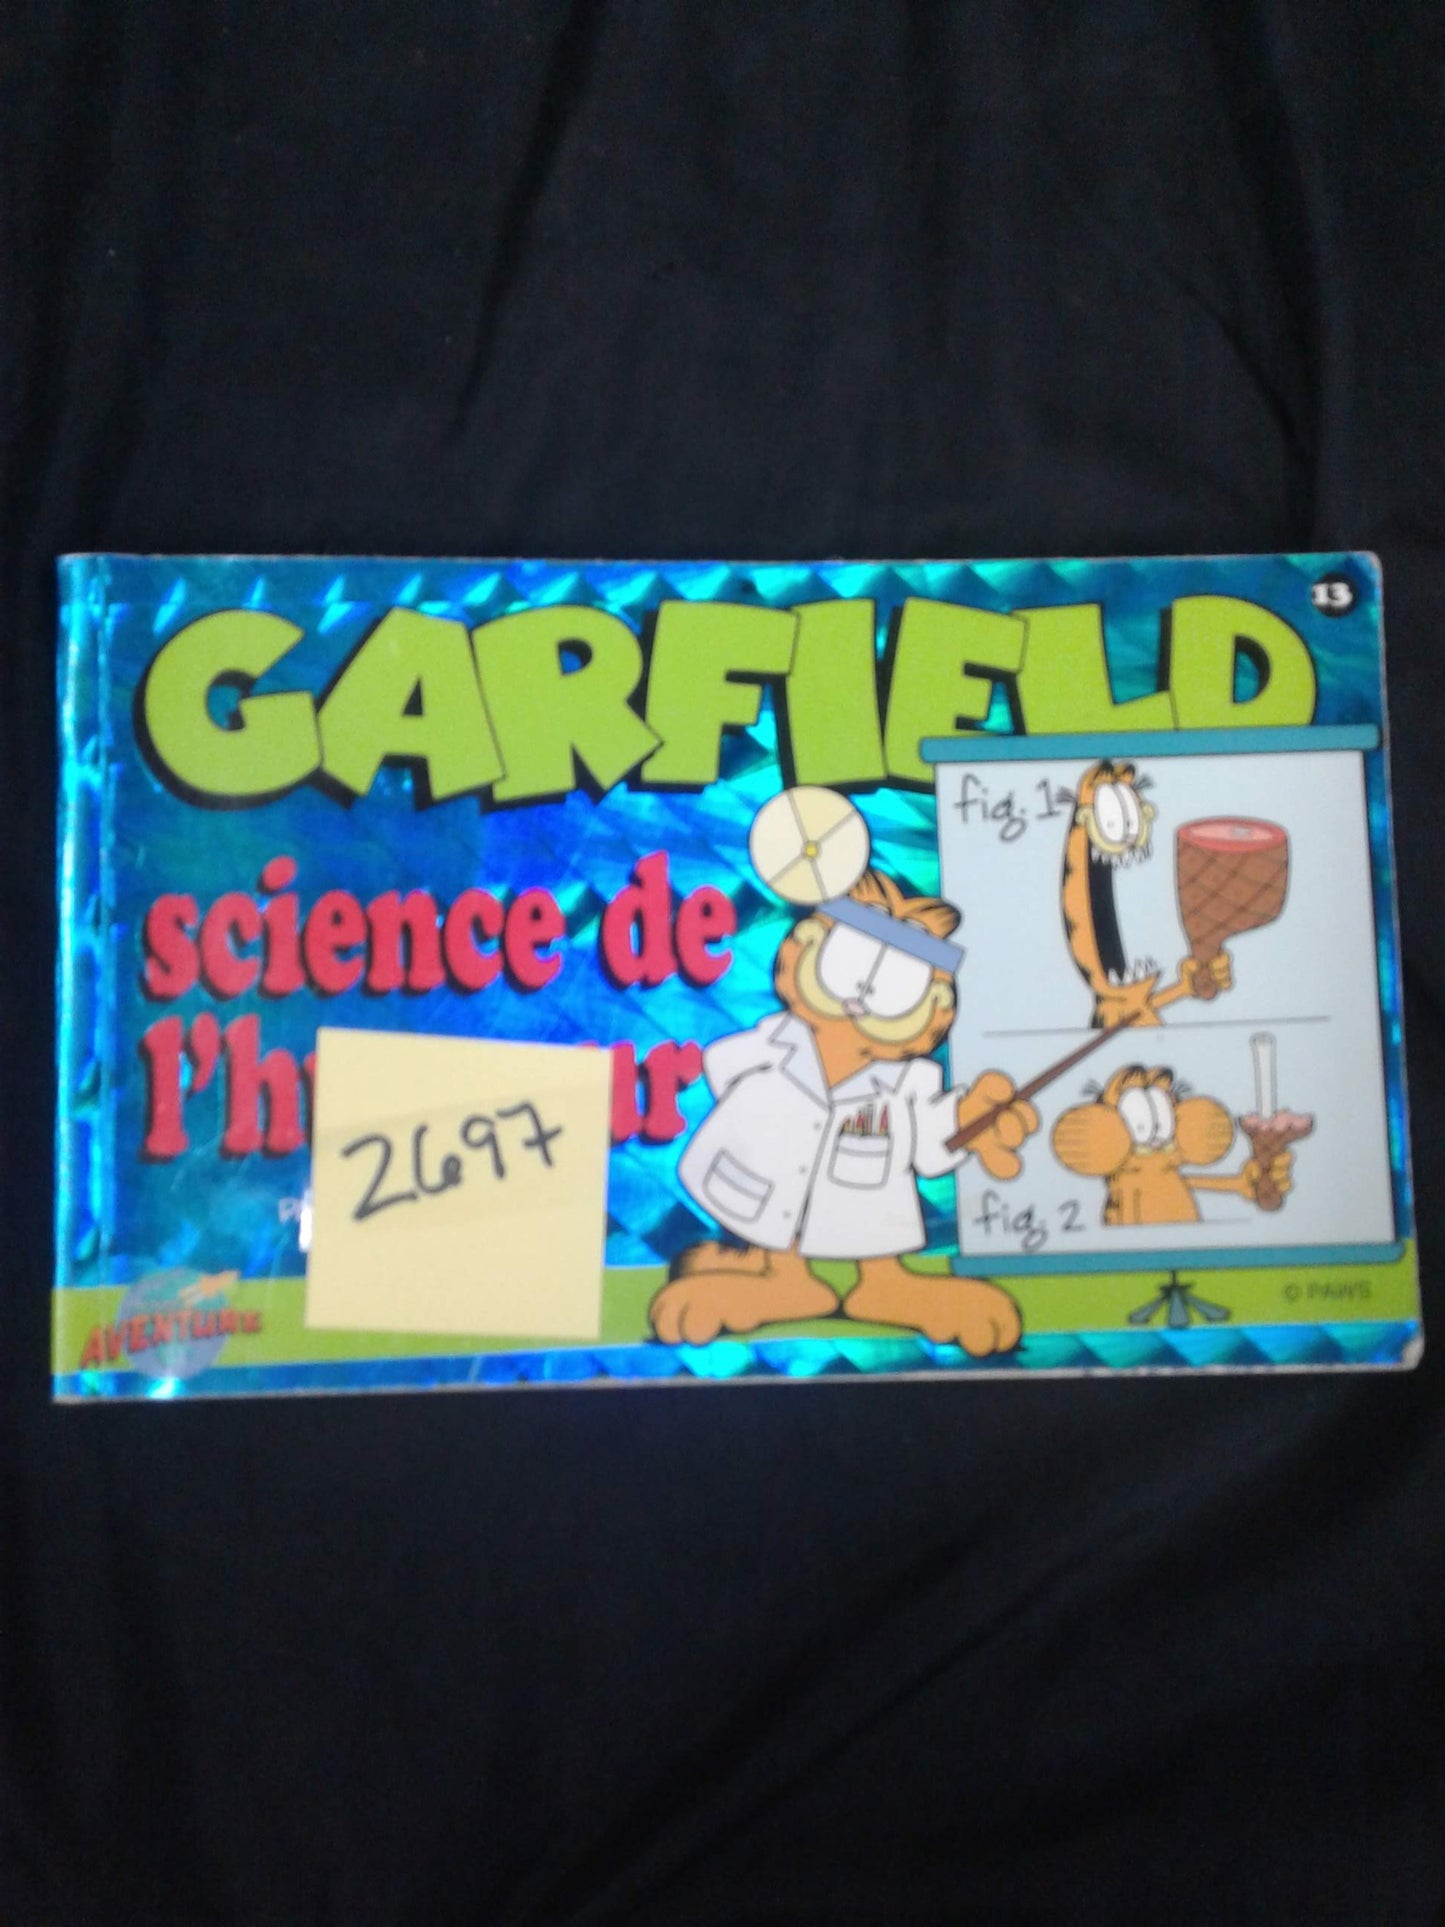 Garfield science de l'humour